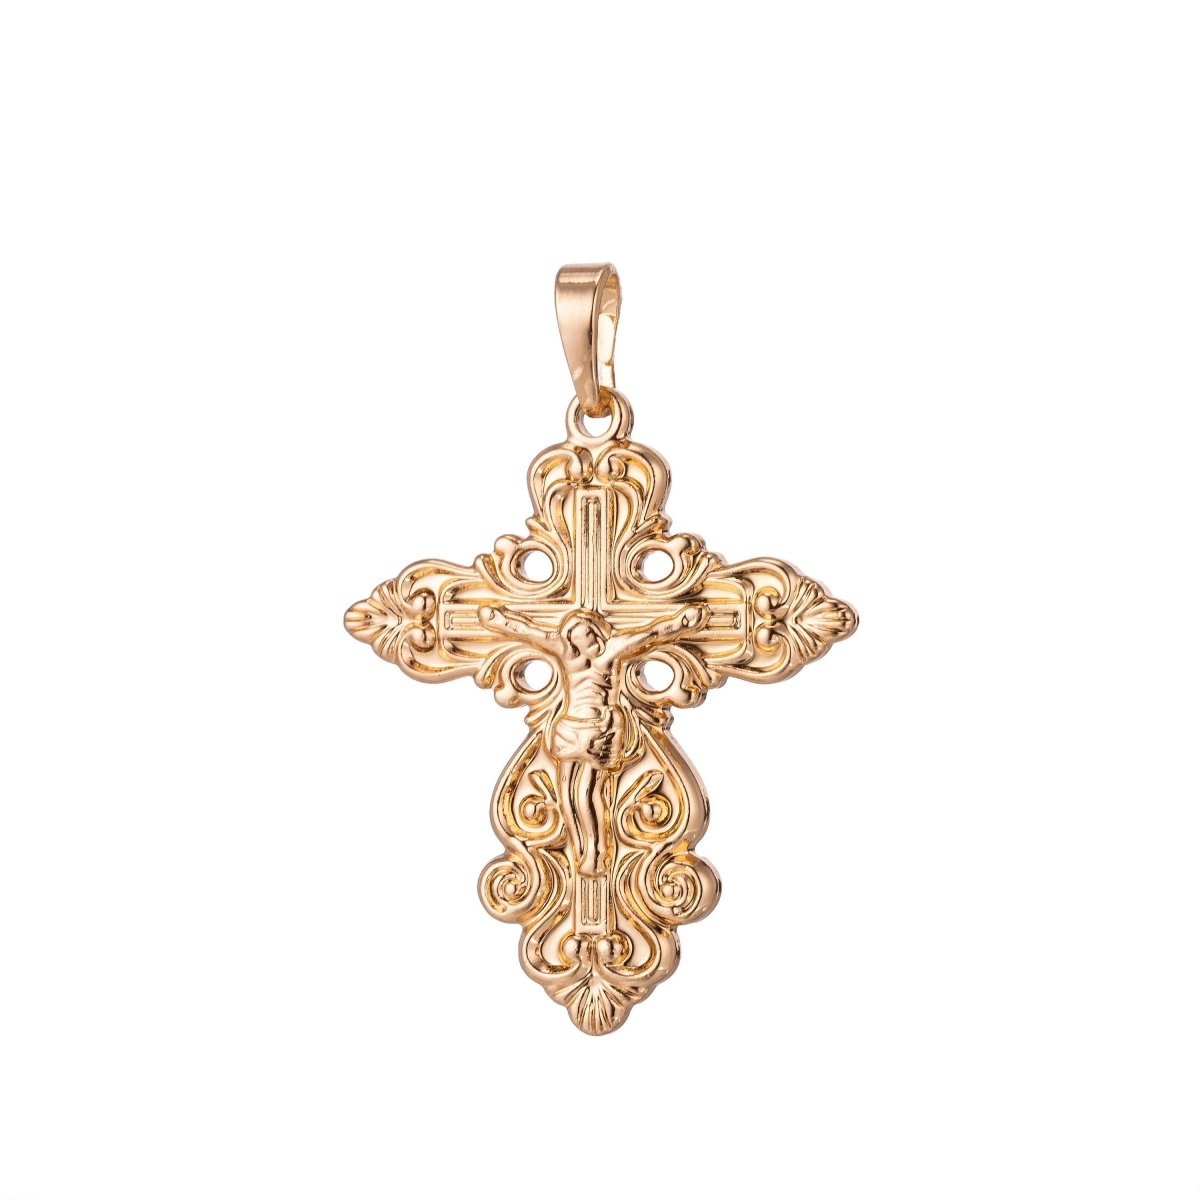 Gold Filled Ornate Cross Charm, Crucifix Charm, Gold Cross, Gold Ornate Cross Pendant Crucifix, Religious Charm Rosary Jewelry Making H-867 - DLUXCA